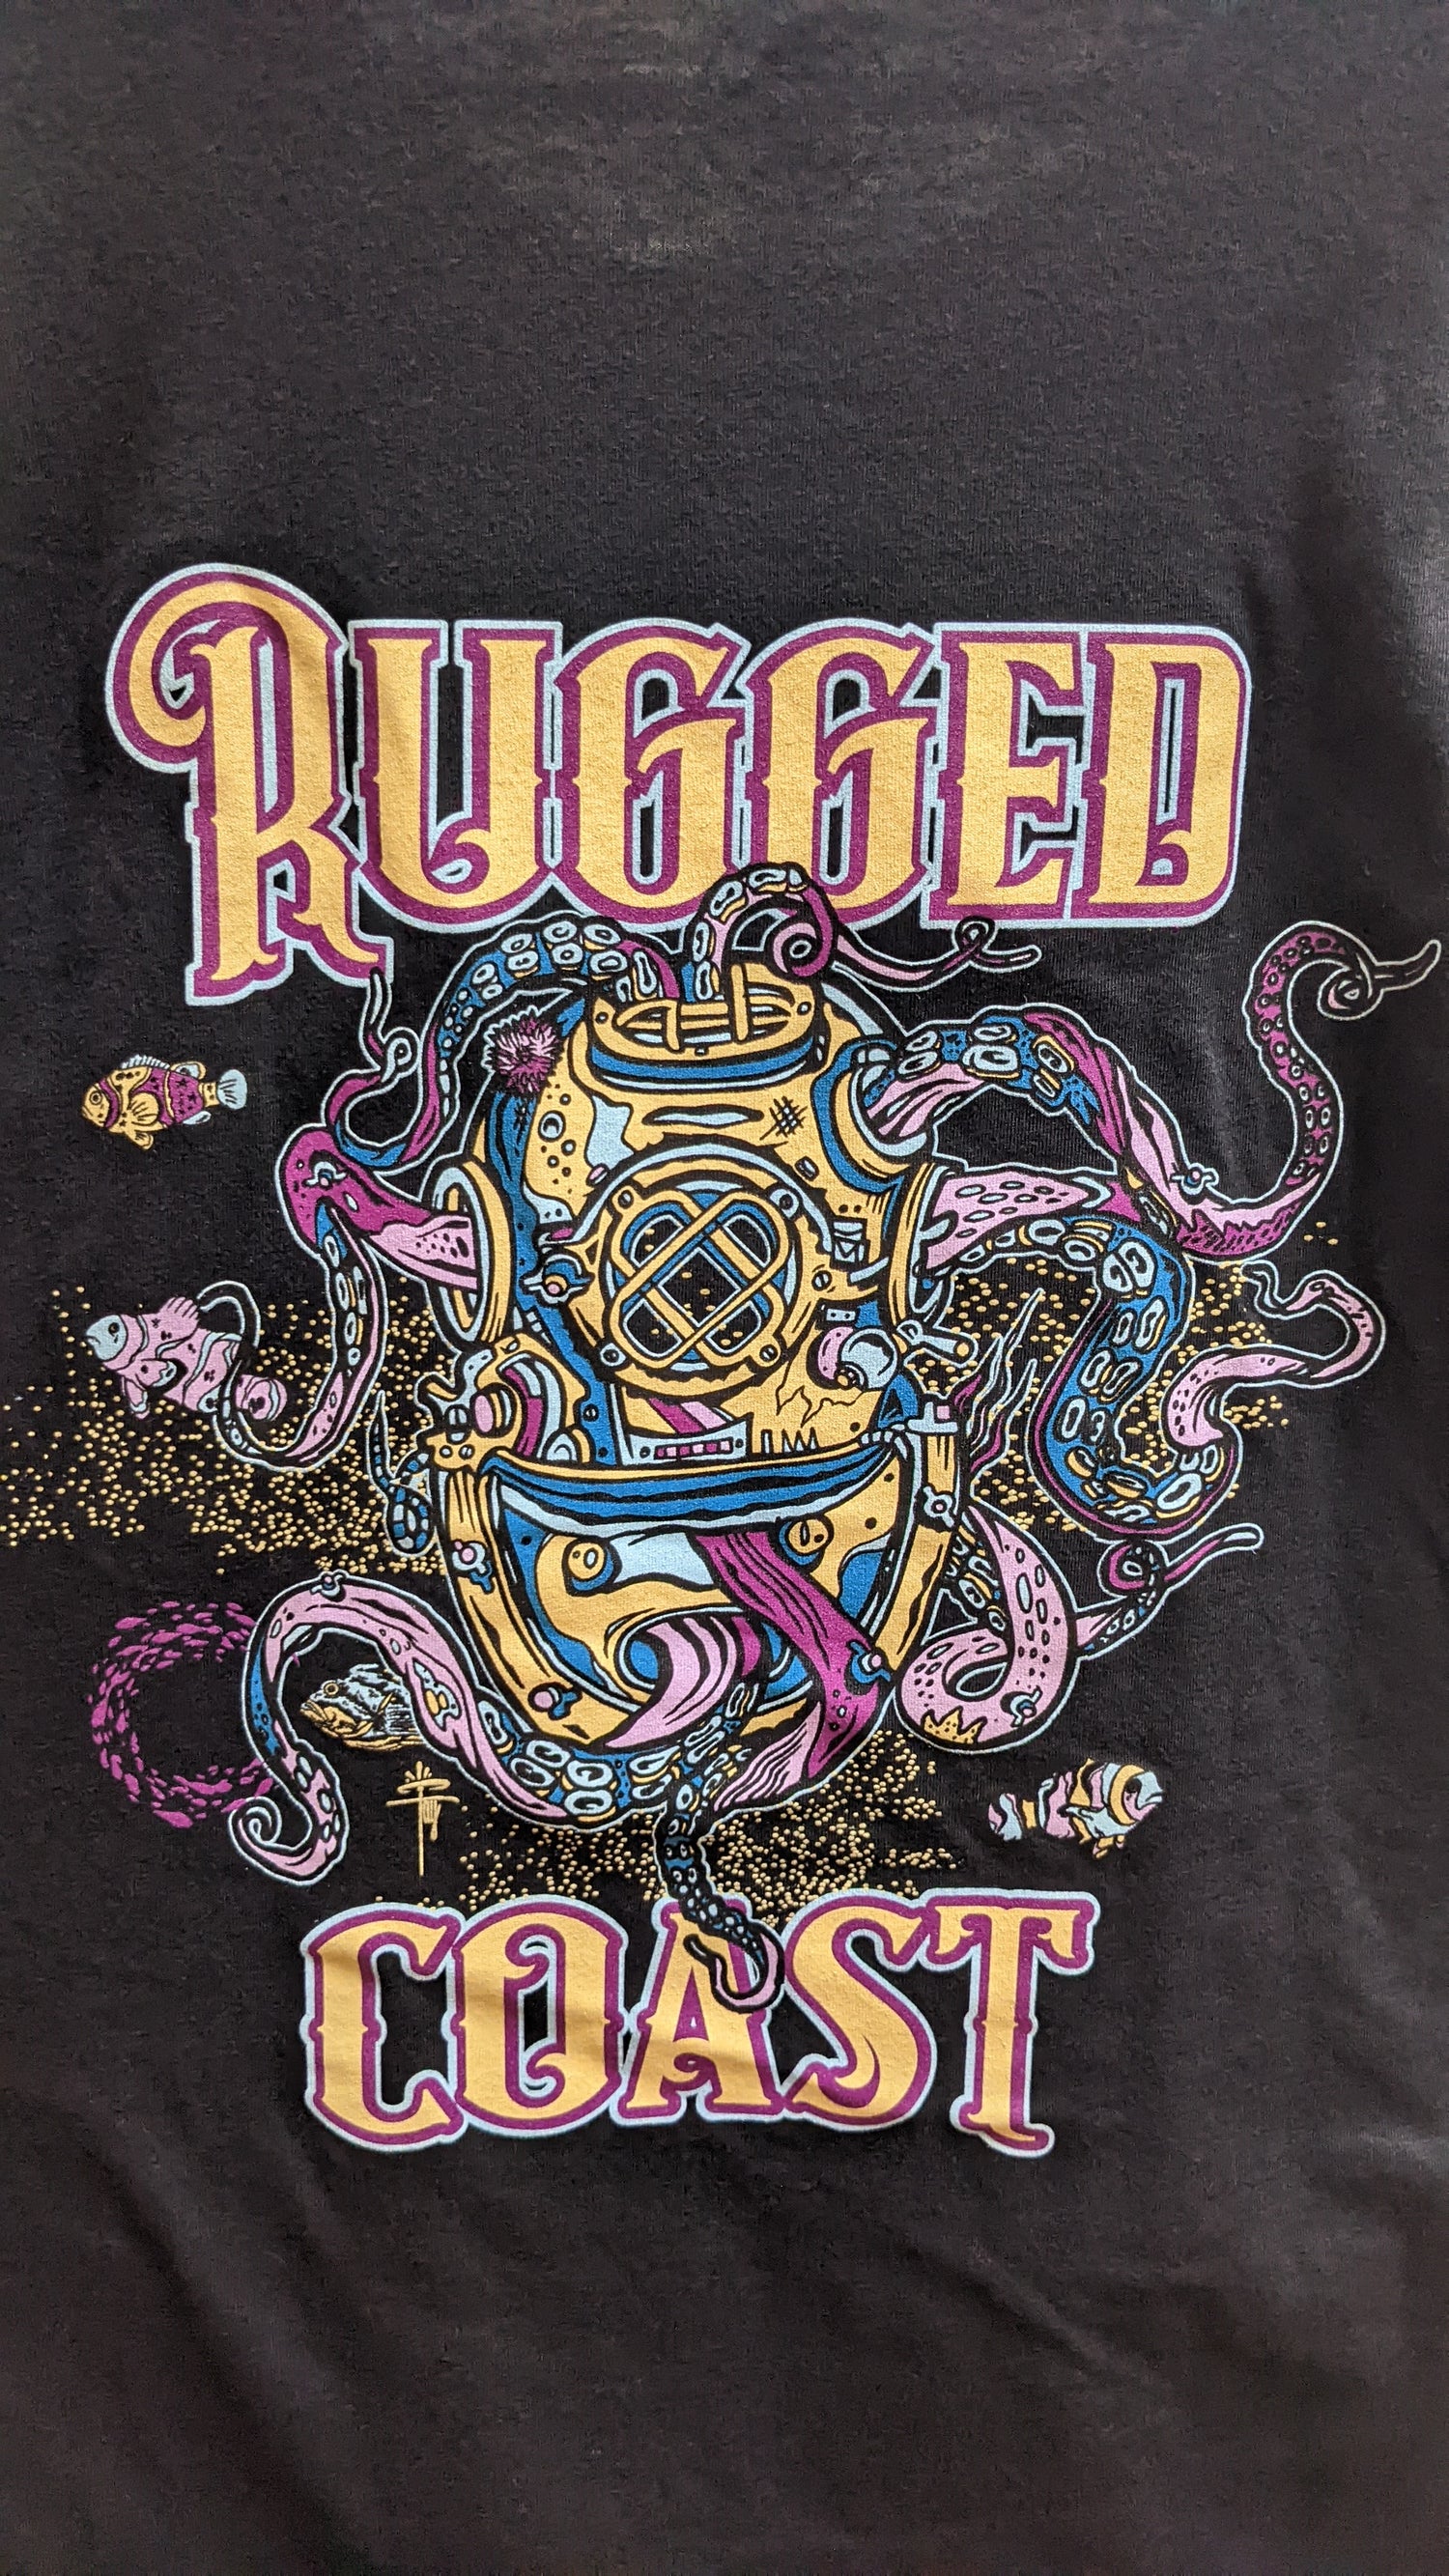 Black ocean inspired shirt , by Rugged Coast